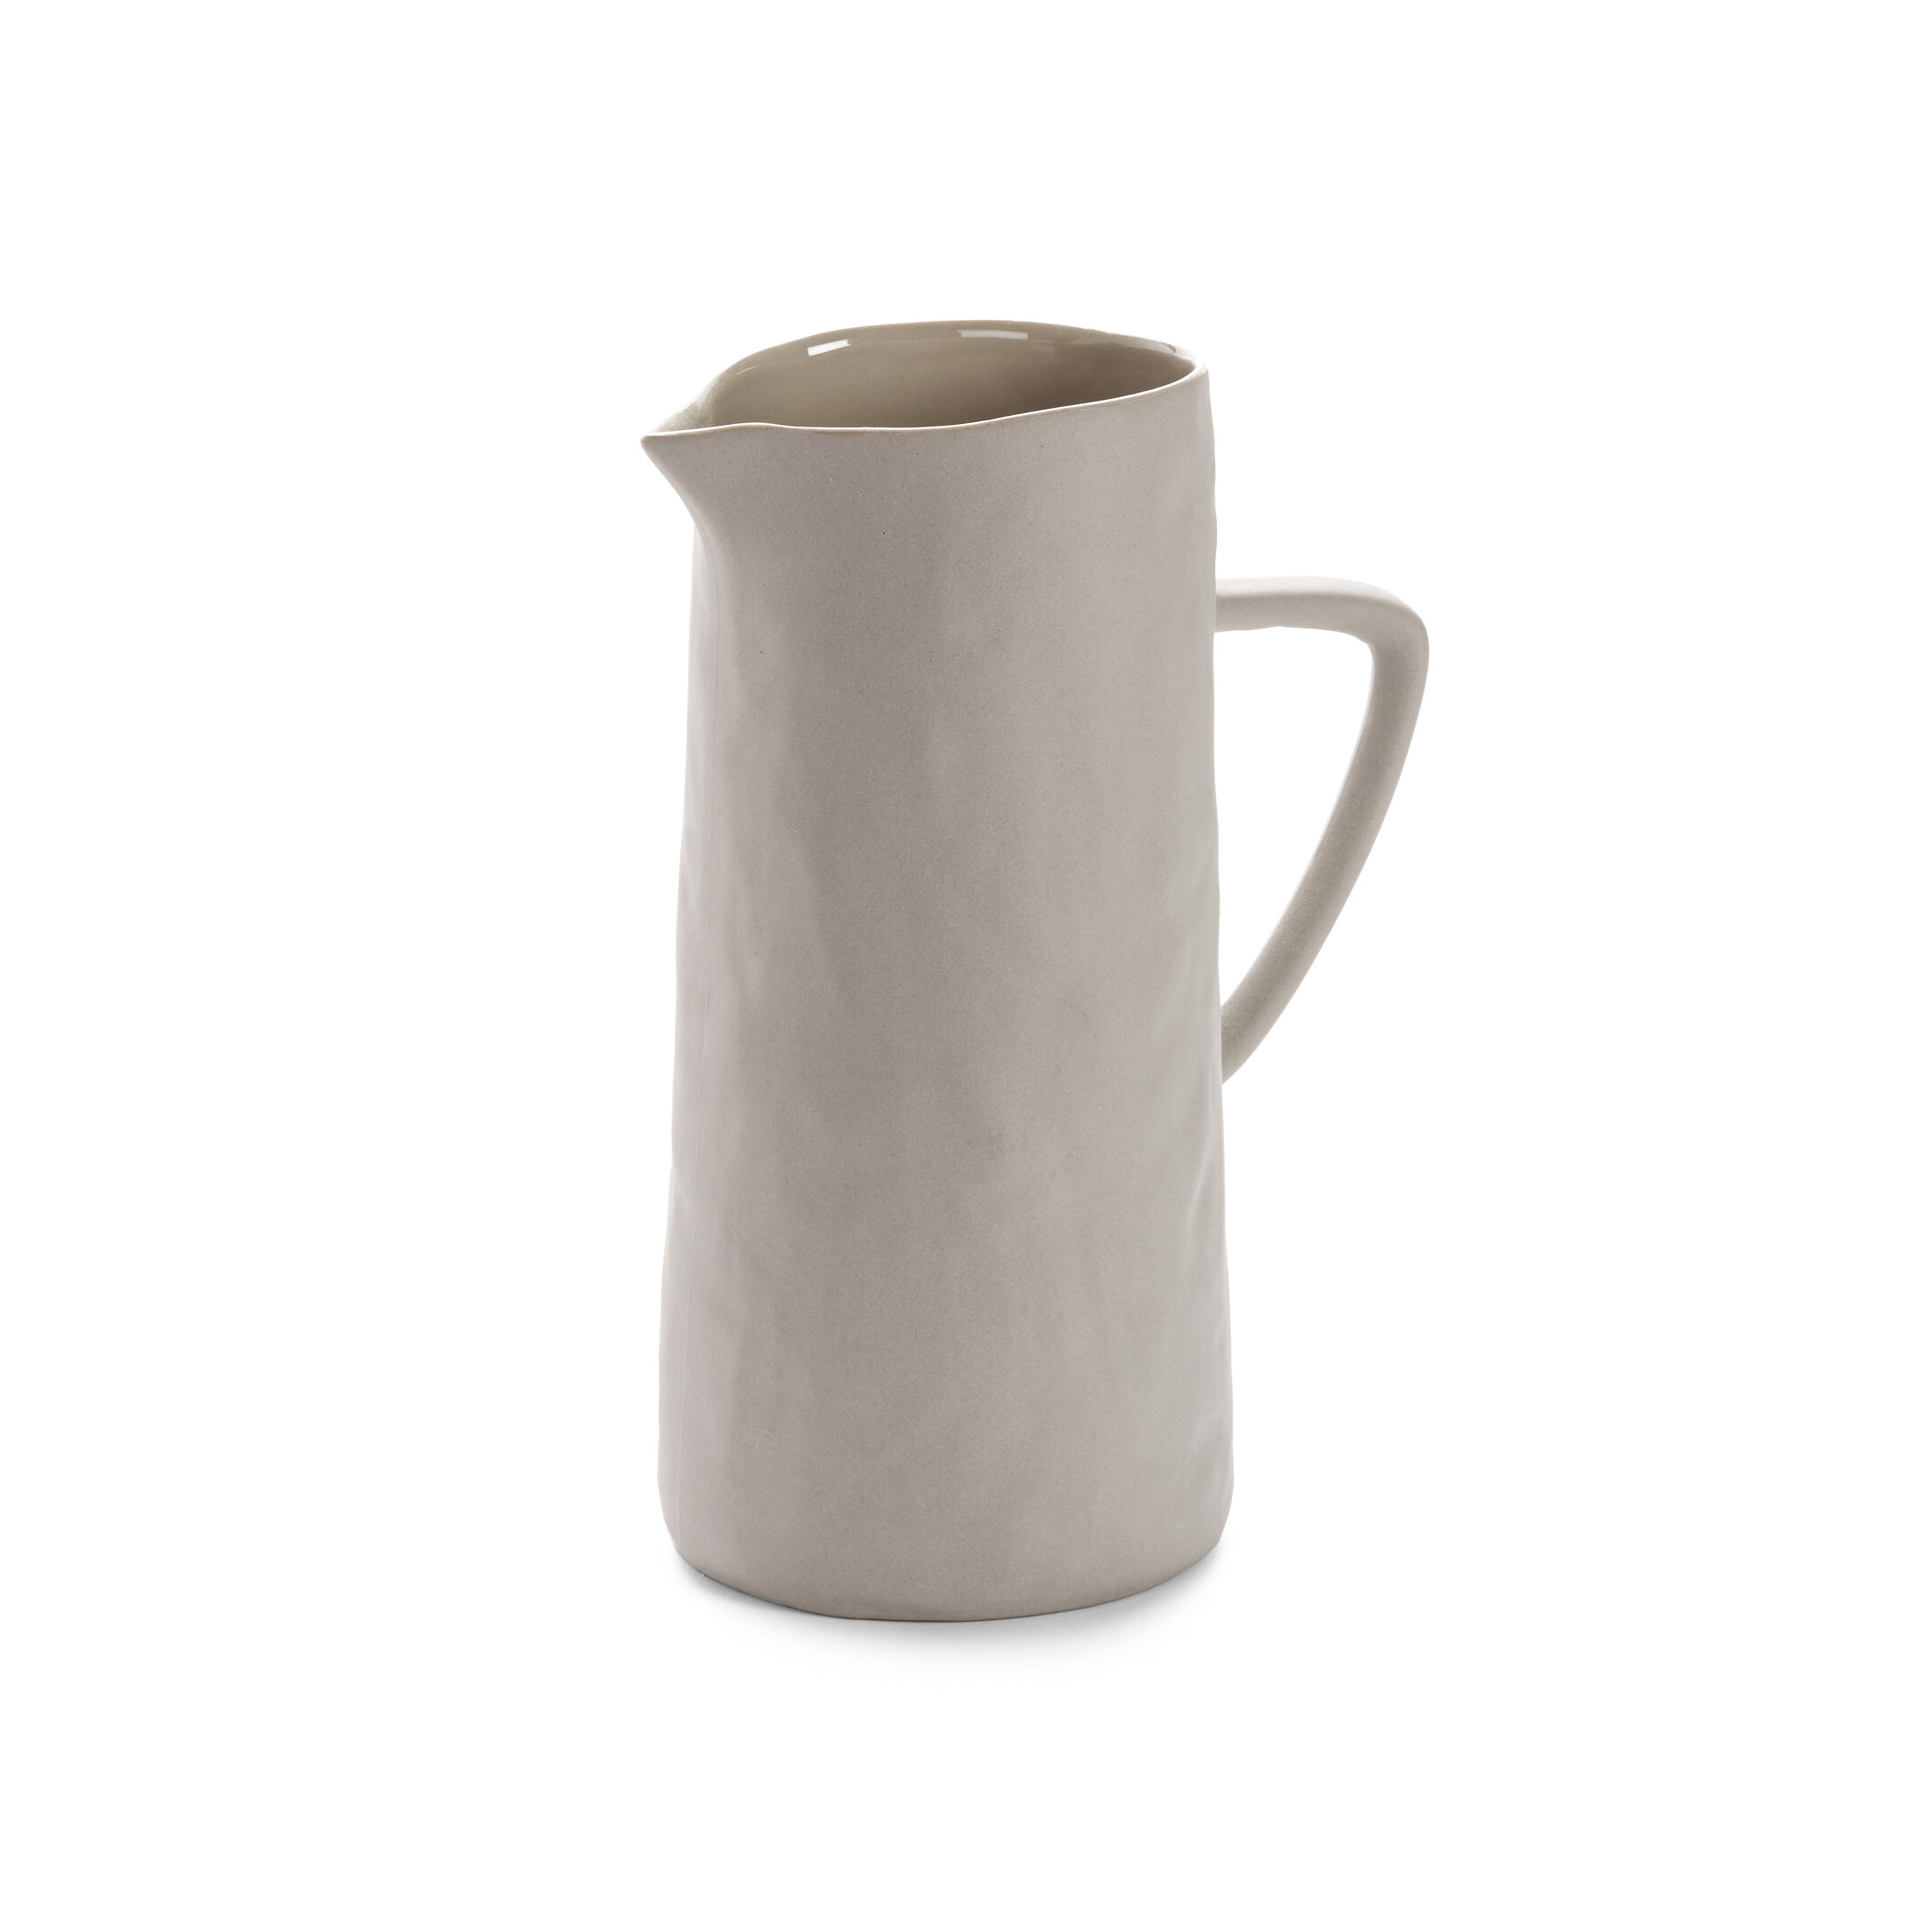 on-white-ceramic-pitcher-photo-example.JPG